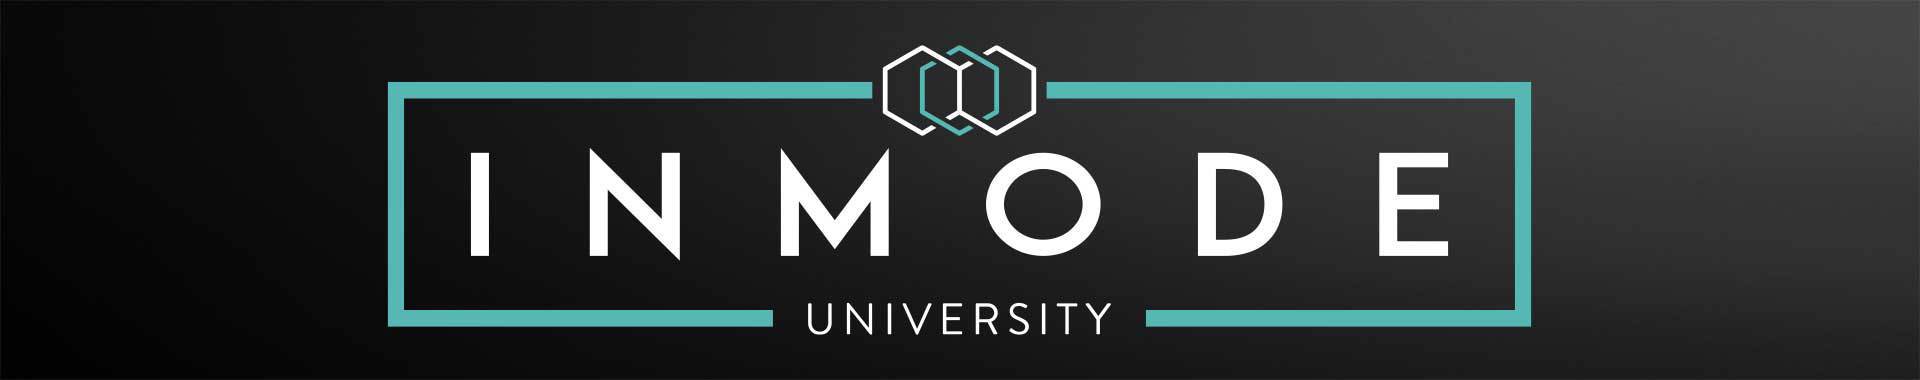 Inmode University